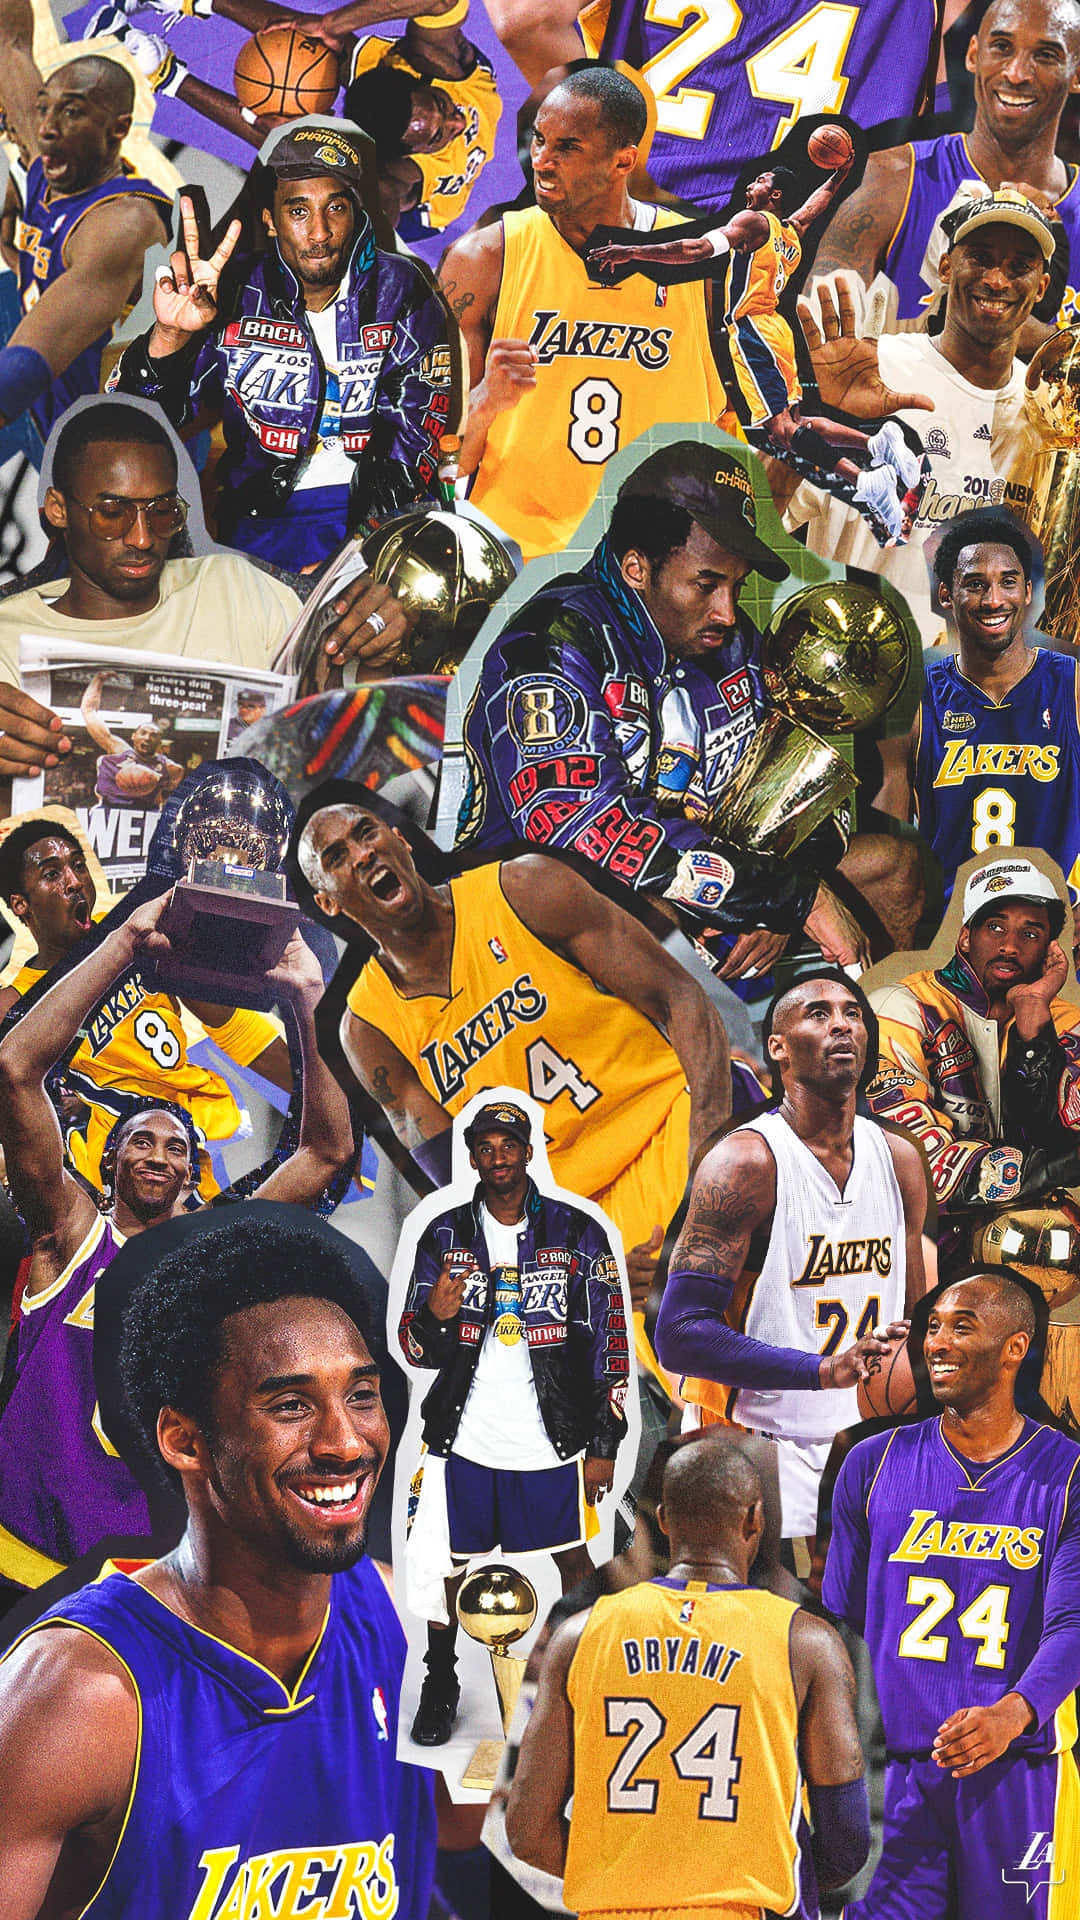 Kobe Bryant inspires fans all around the world